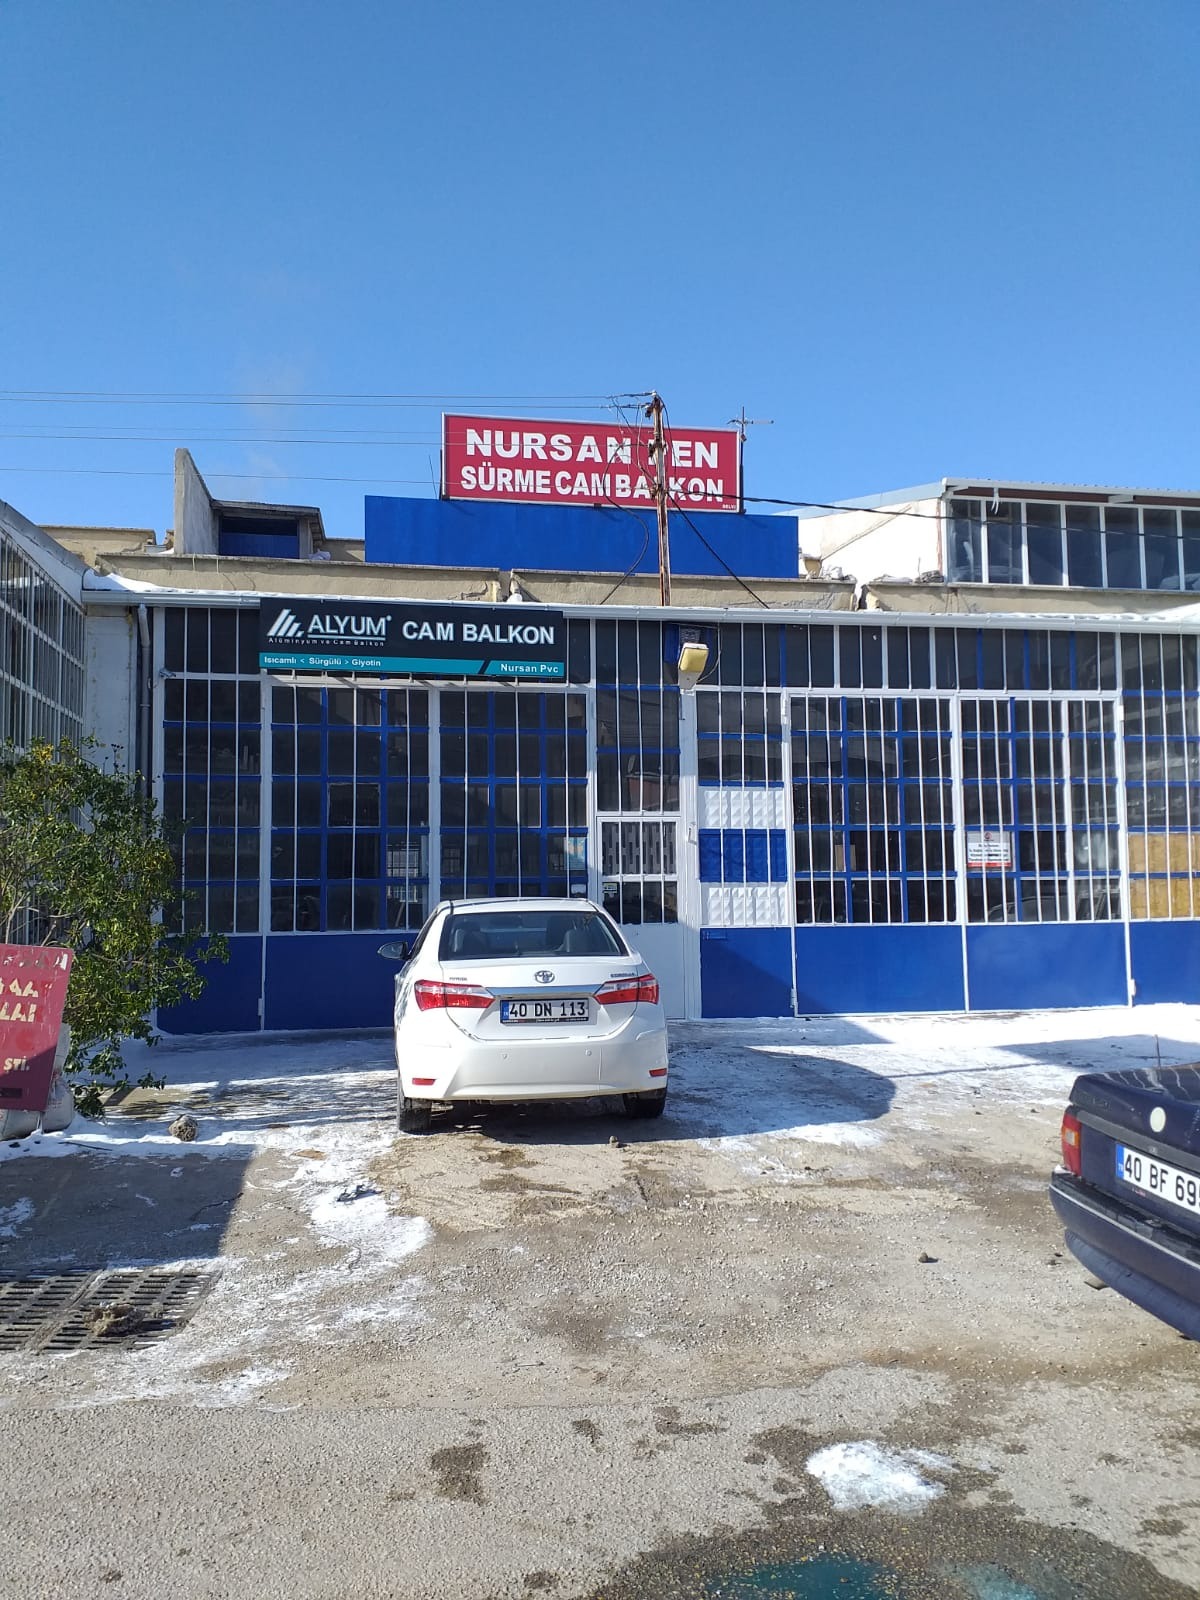 Kırşehir / Nursan Aluminium and Glazing Balcony